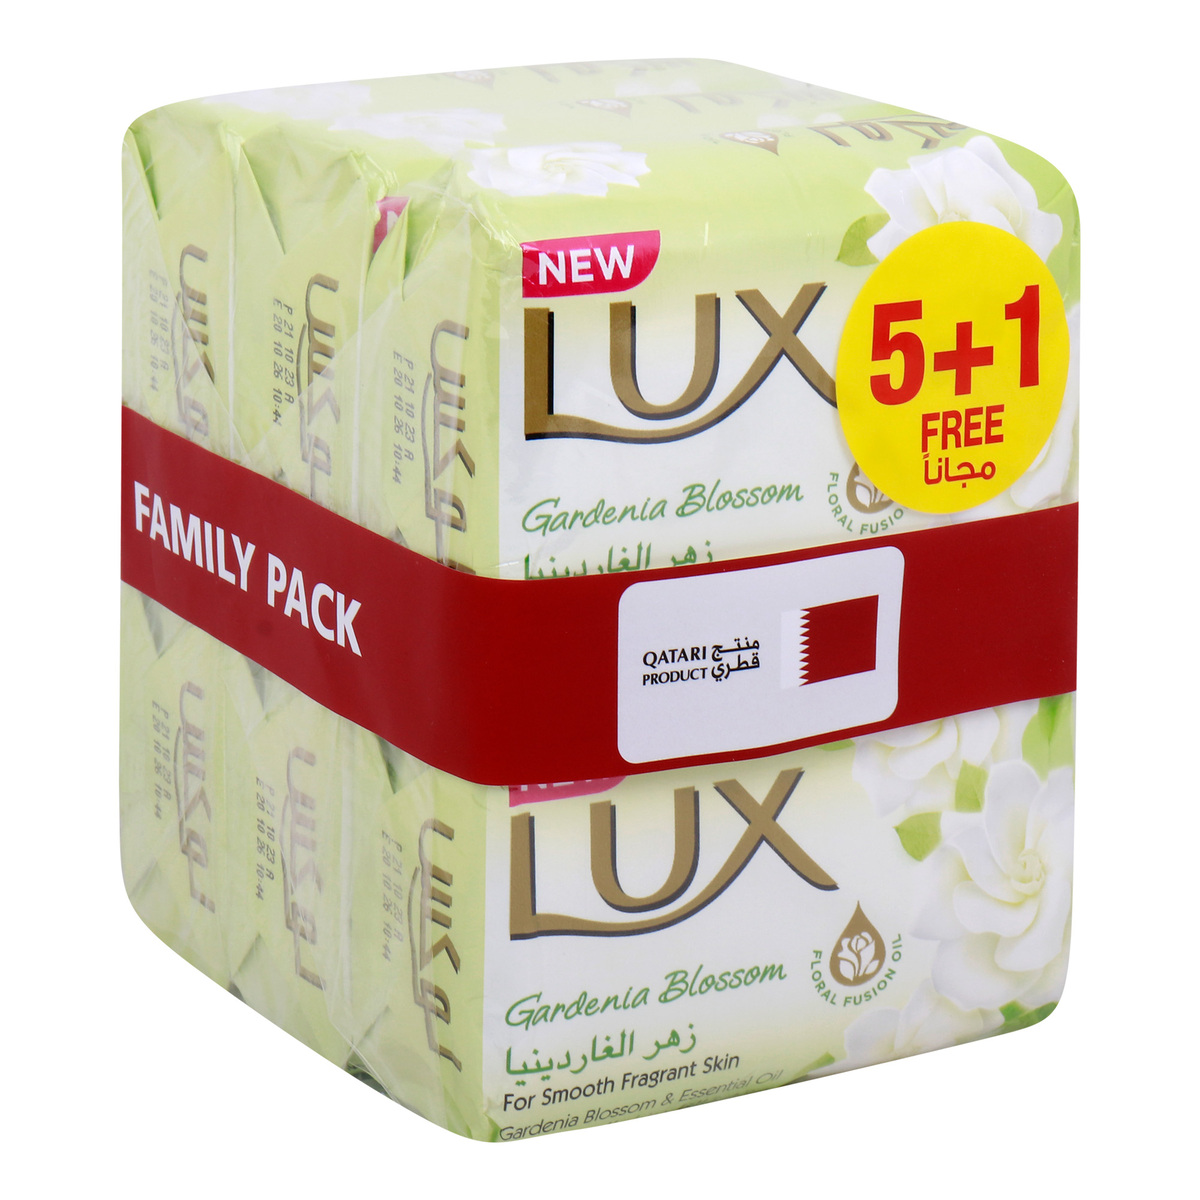 Lux Gardenia Blossom Soap, 170 g 5+1